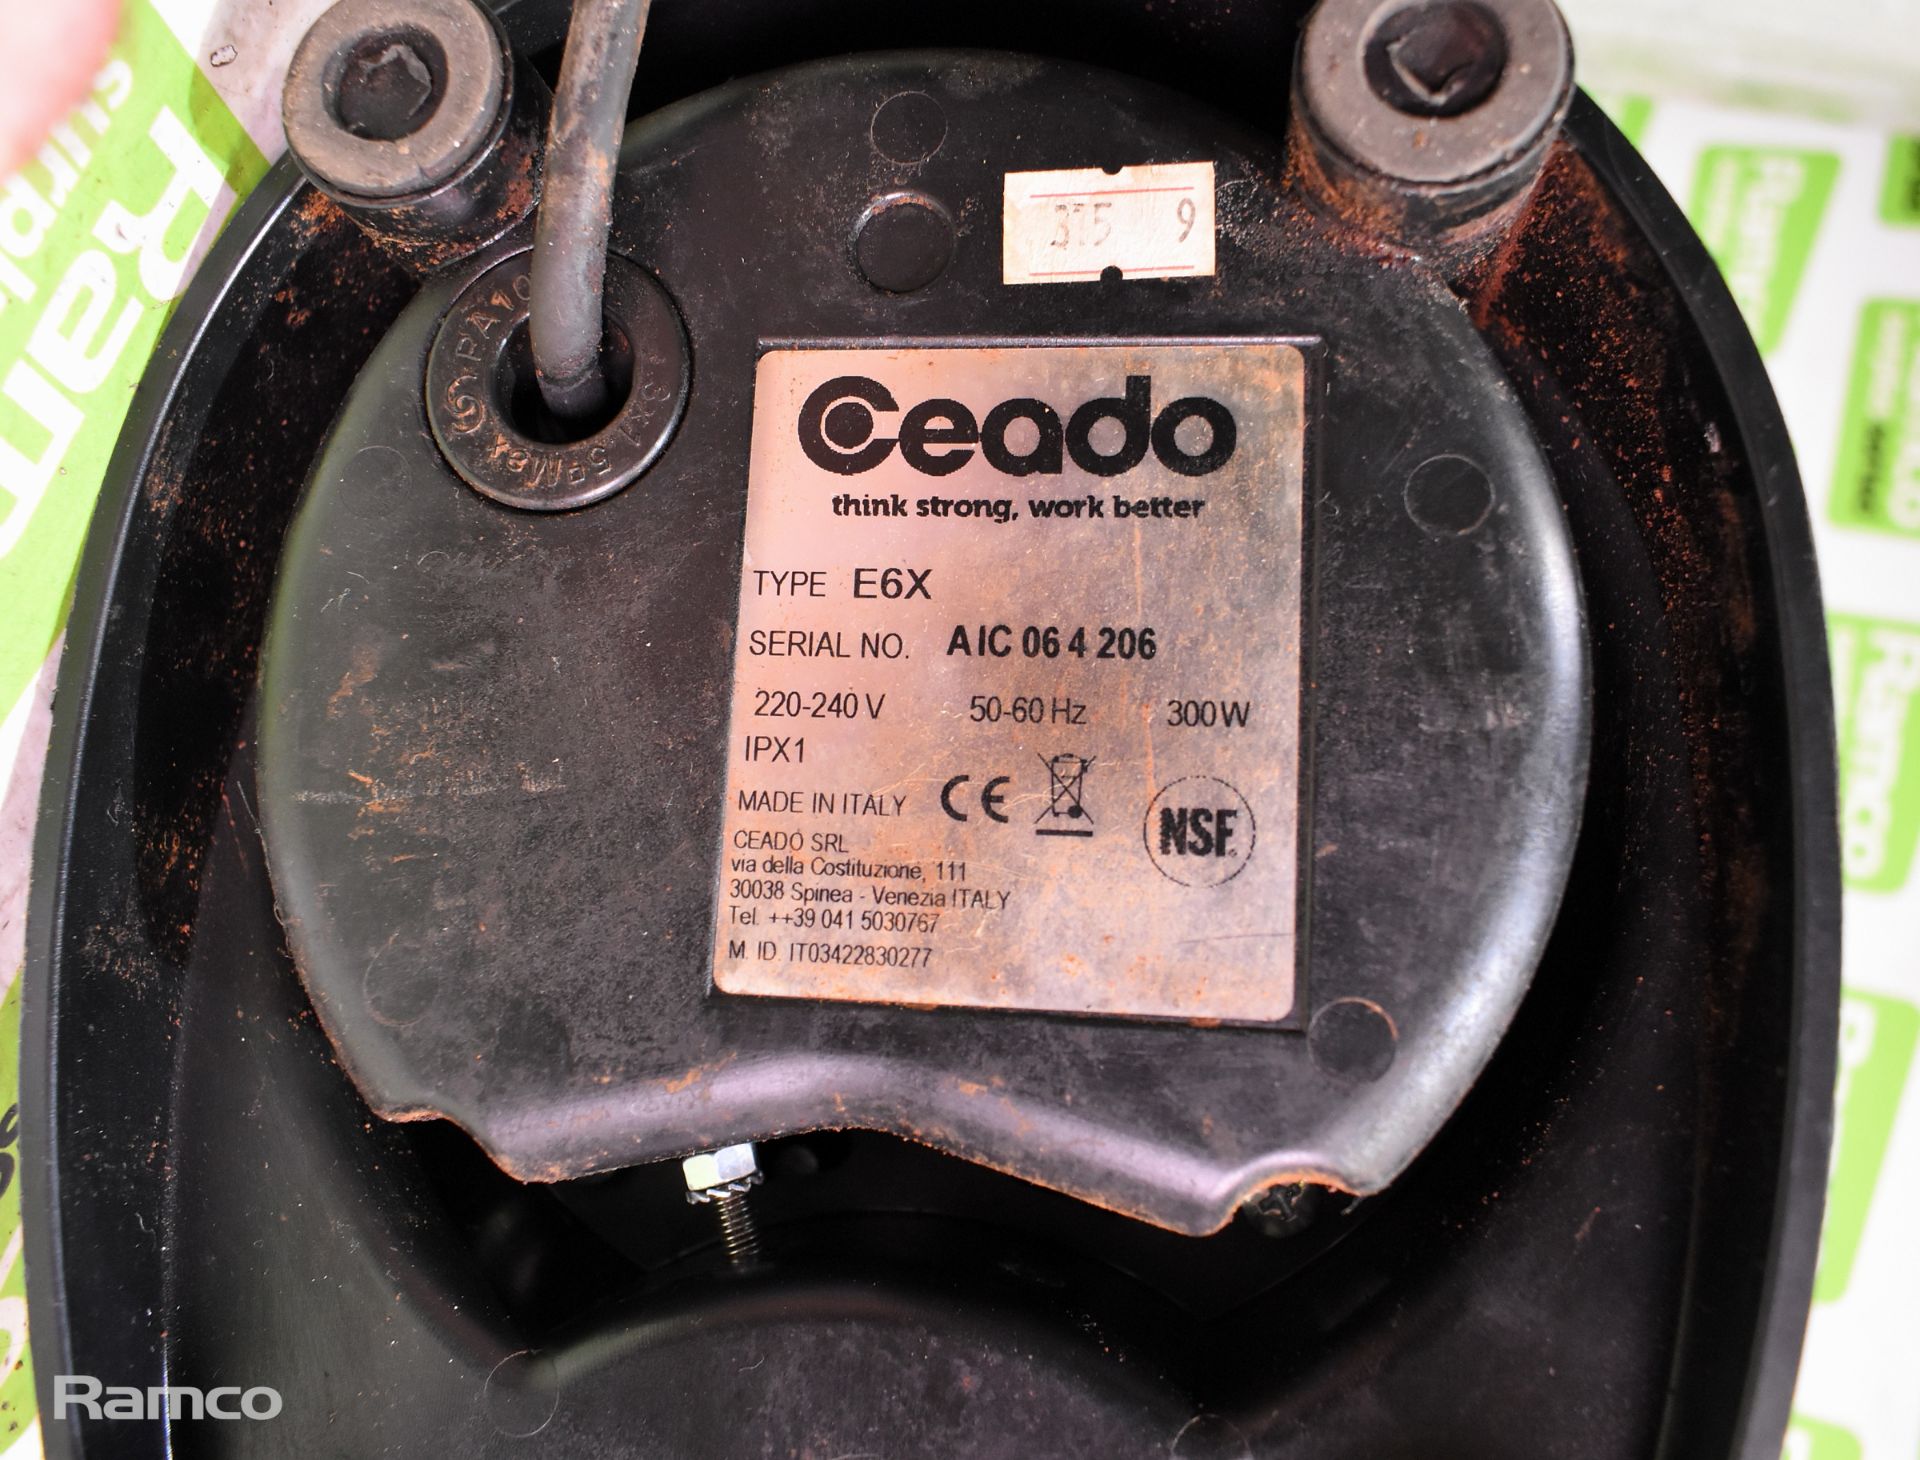 2x Ceado E6X espresso coffee grinder bodies - Image 6 of 10